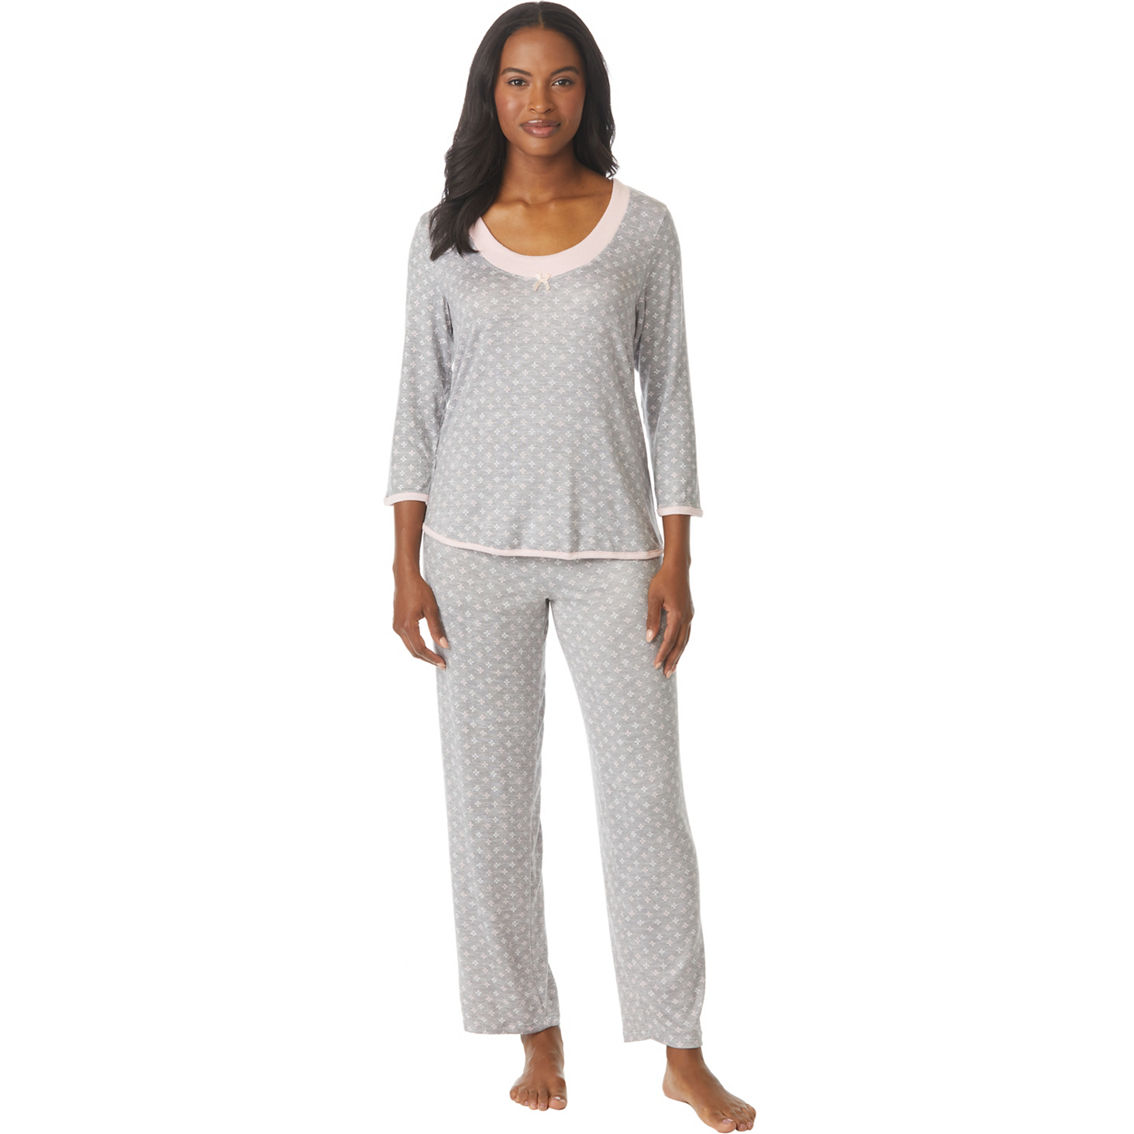 Rene Rofe Soft Pajamas 2 pc. Set - Image 3 of 3